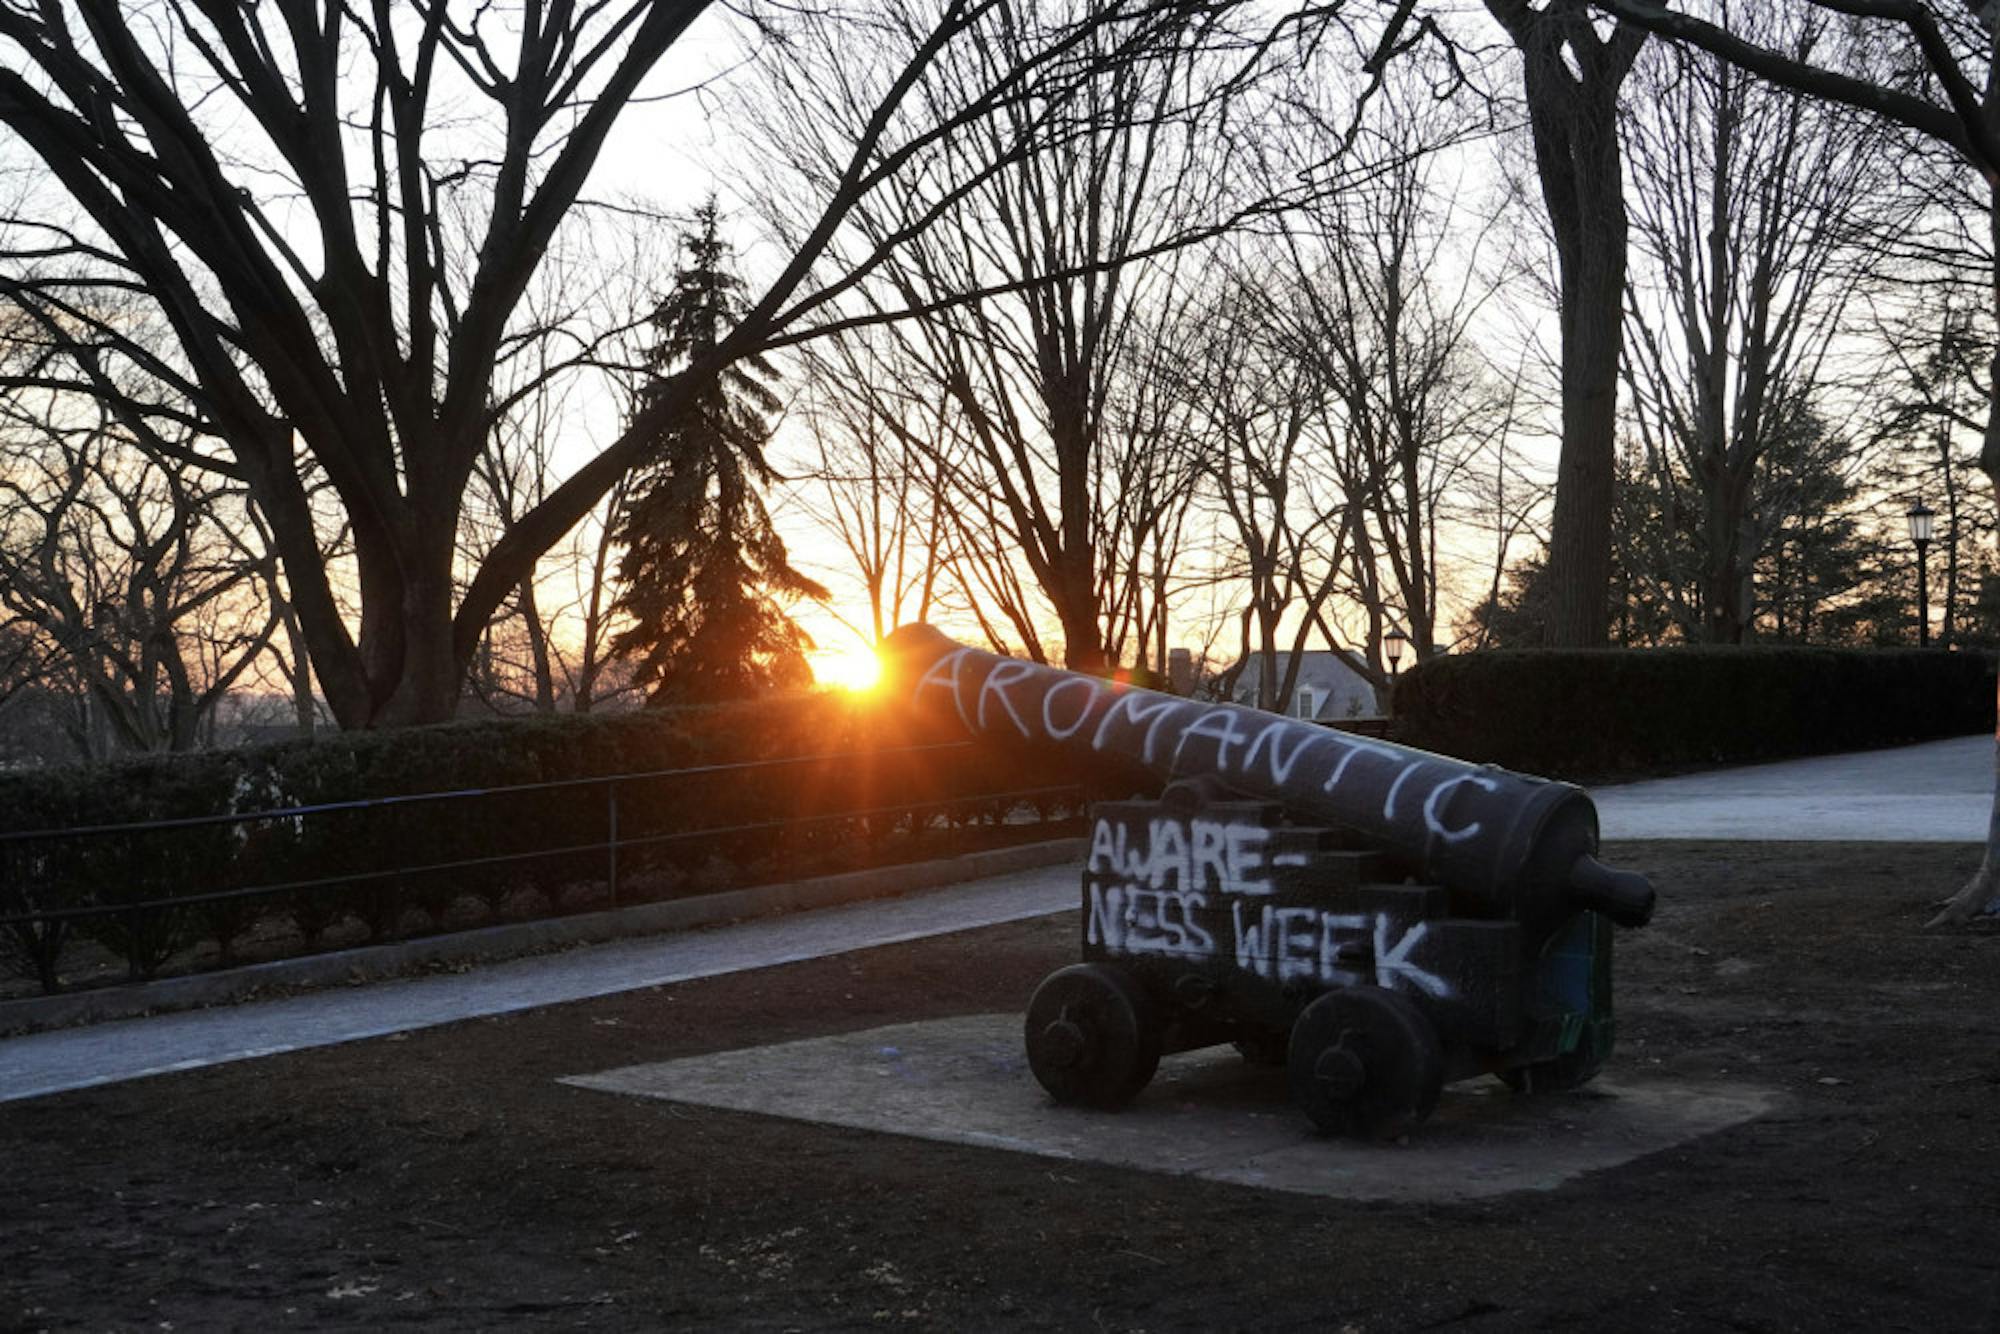 Firing cannons in neighborhood probably not free speech